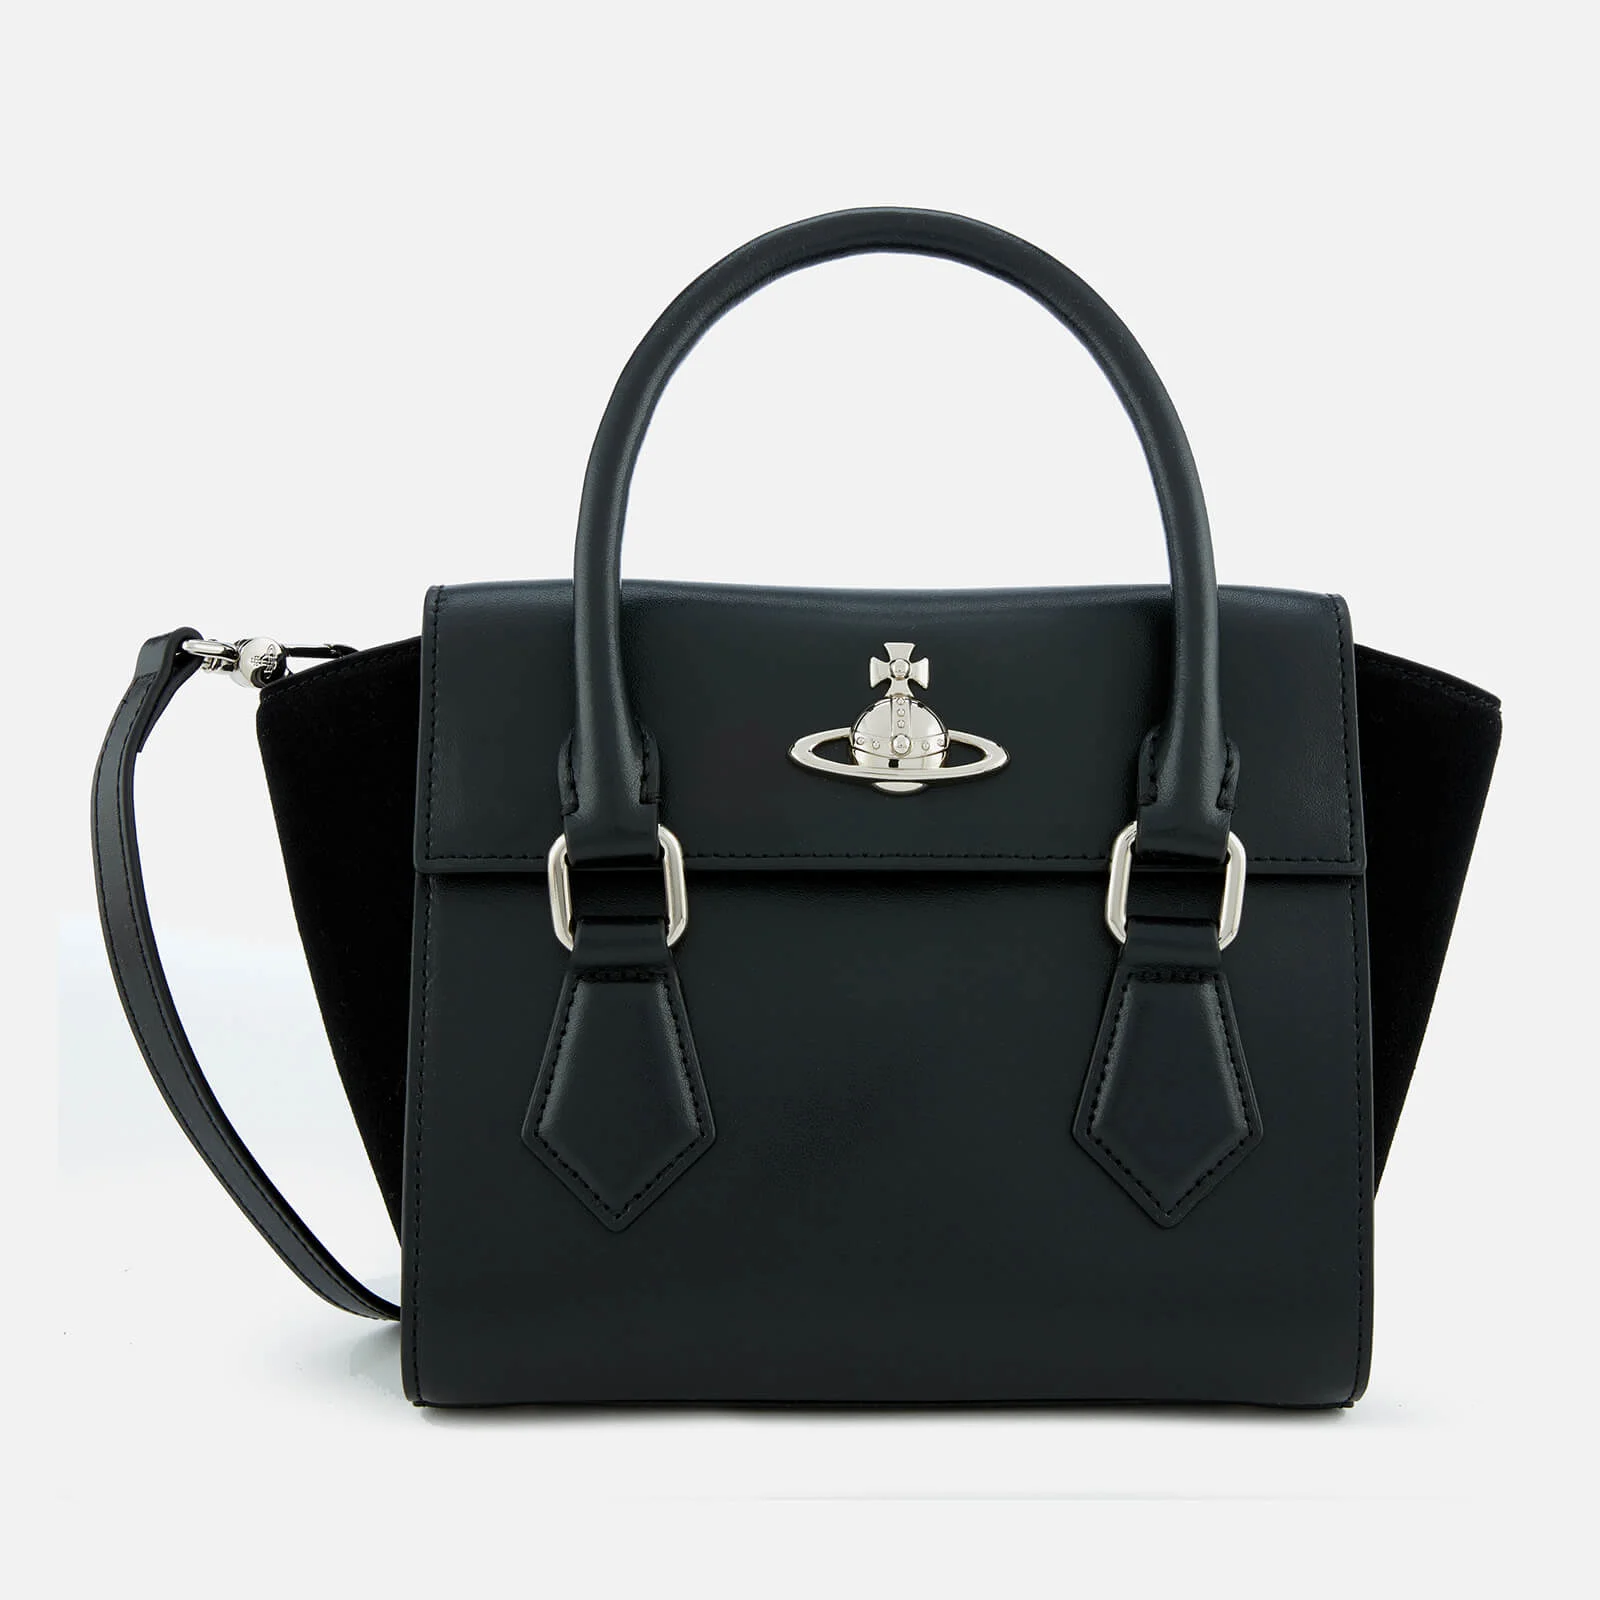 Vivienne Westwood Women's Matilda Small Handbag - Black Image 1